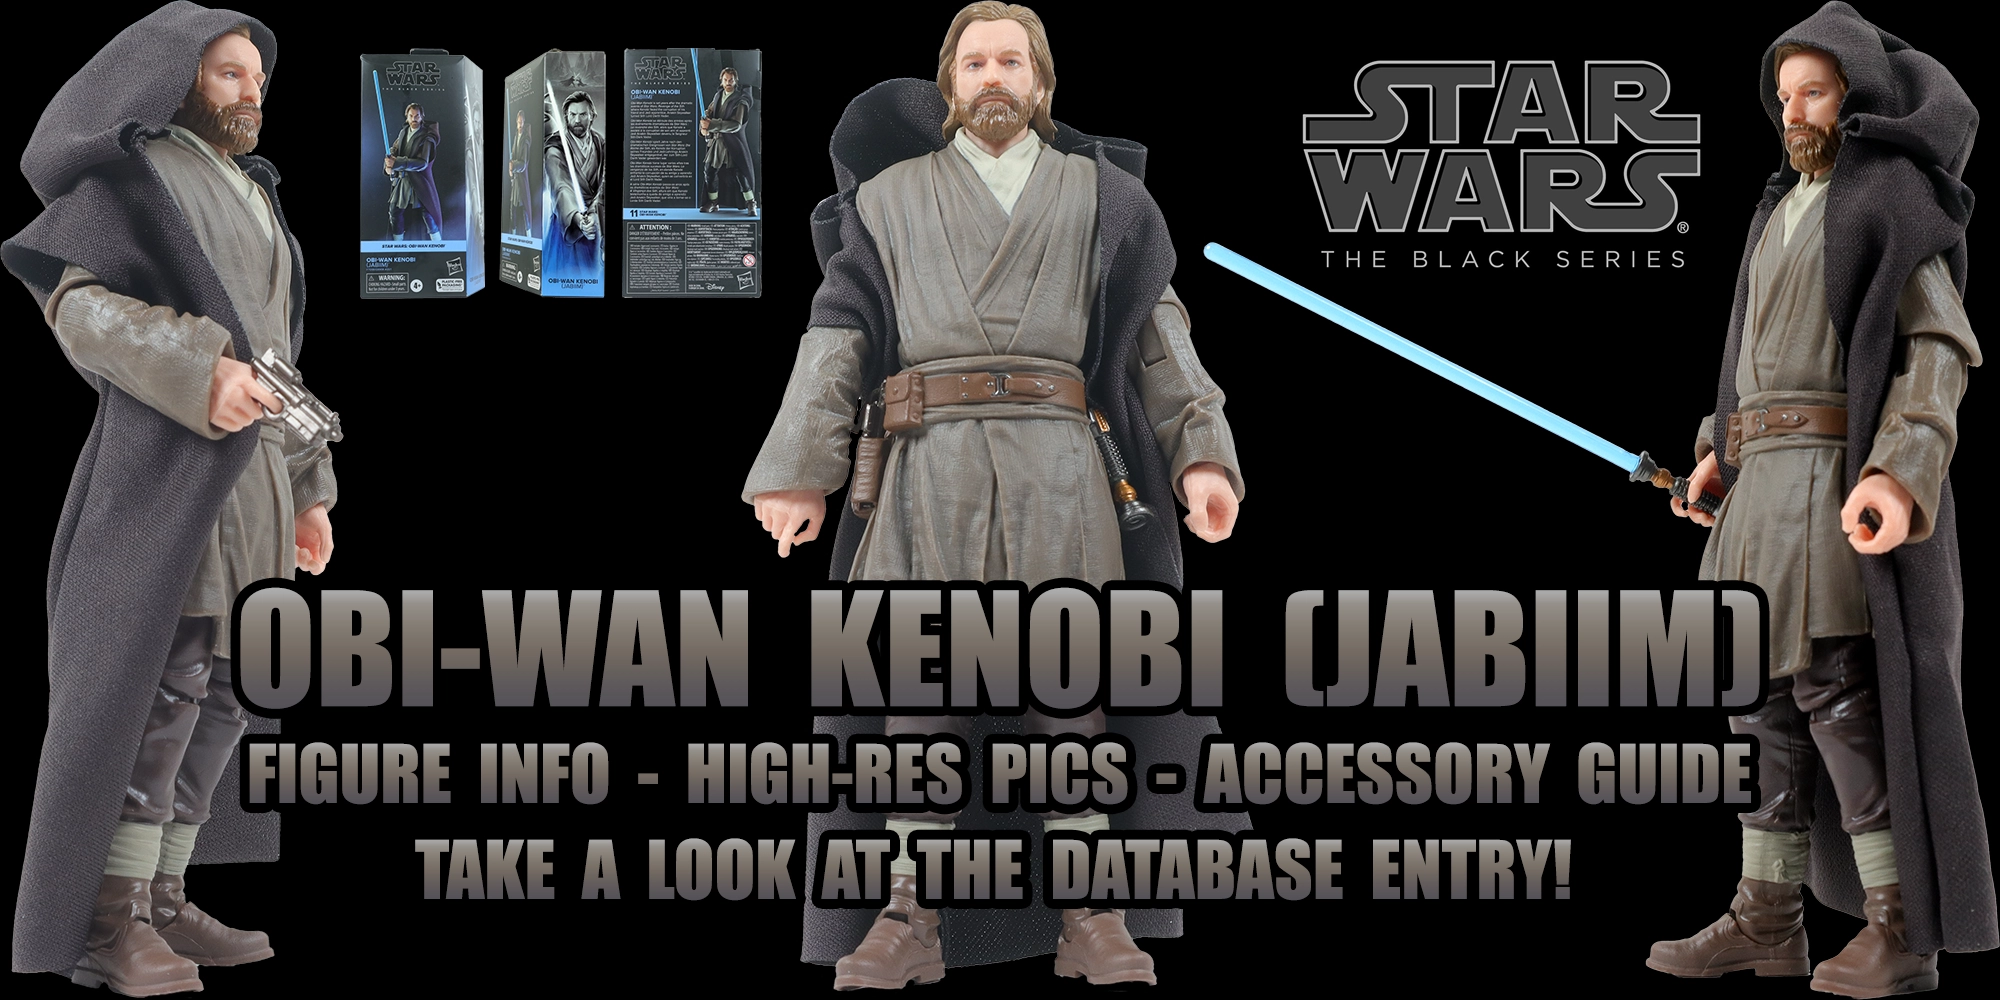 Obi-Wan Kenobi (Jabiim) Added